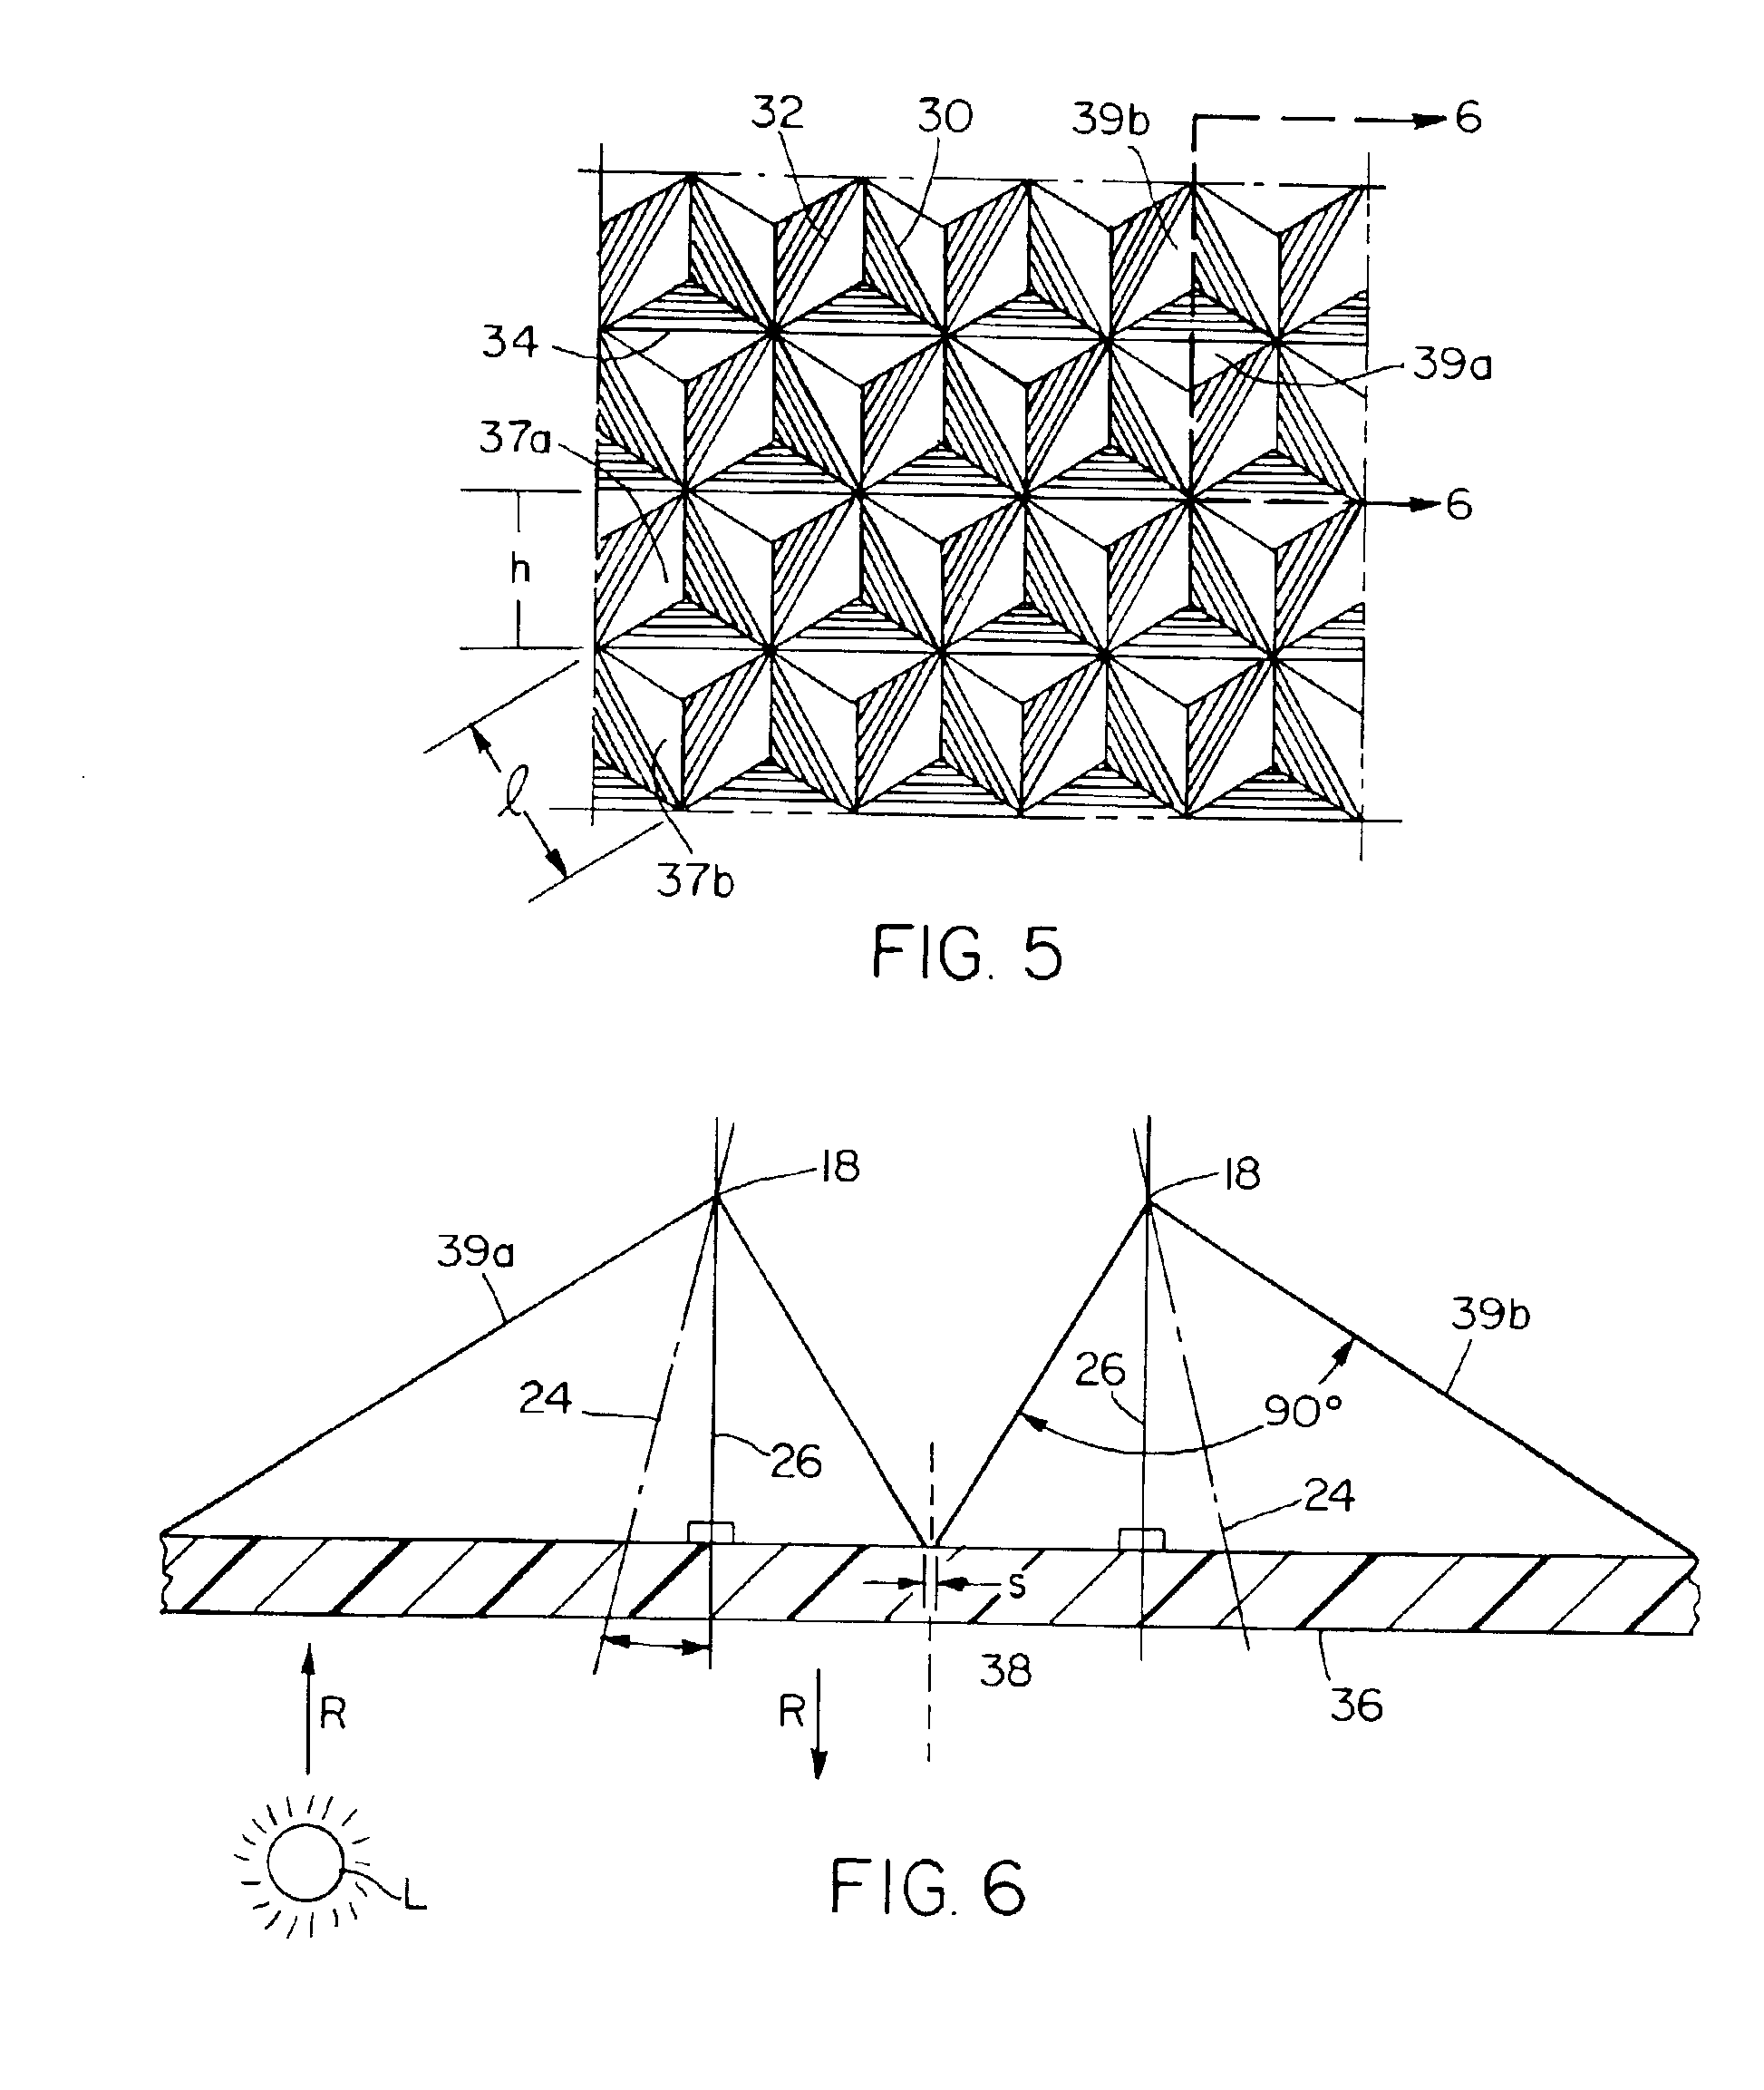 Multi-orientation retroreflective structure